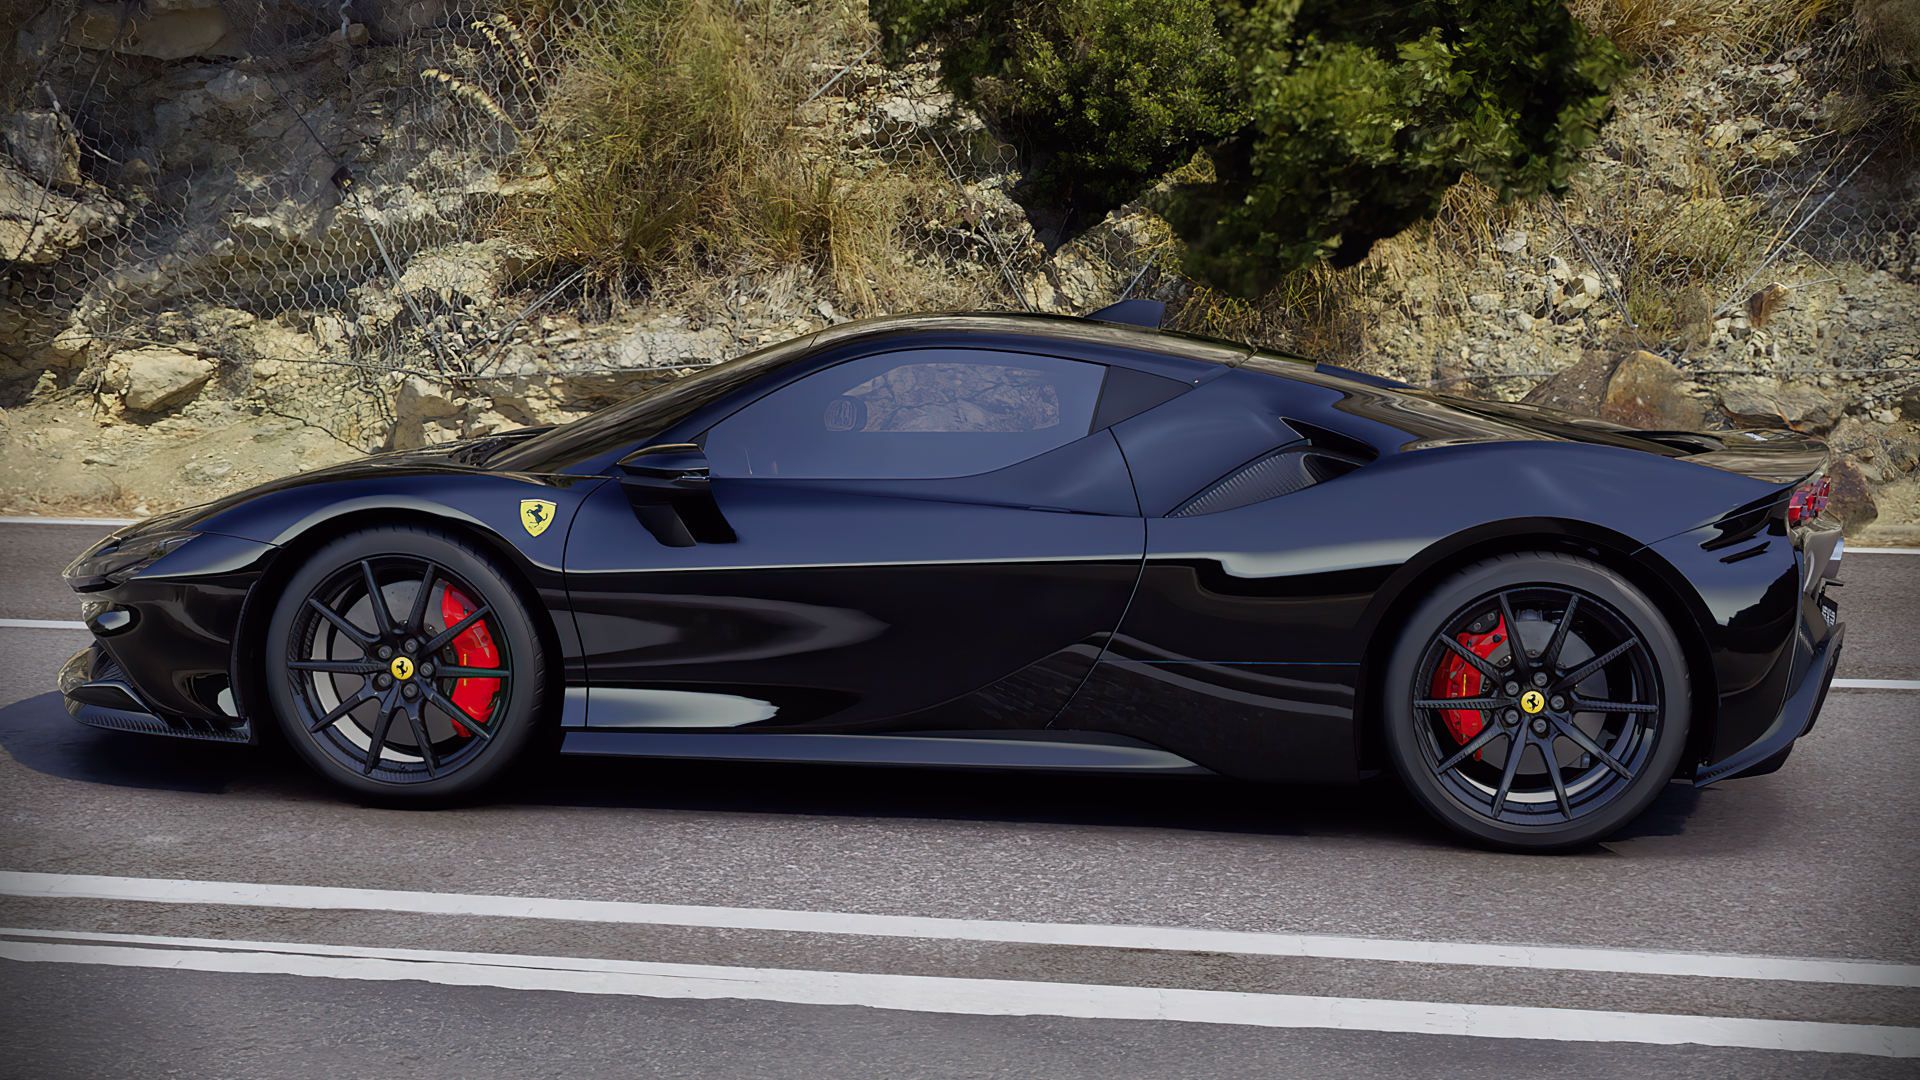 Sf ferrari. Ferrari sf90 Stradale Black. Ferrari sf90 Stradale черная. Феррари sf90 Stradale 2020. Ferrari sf90 Stradale 2021 Black.